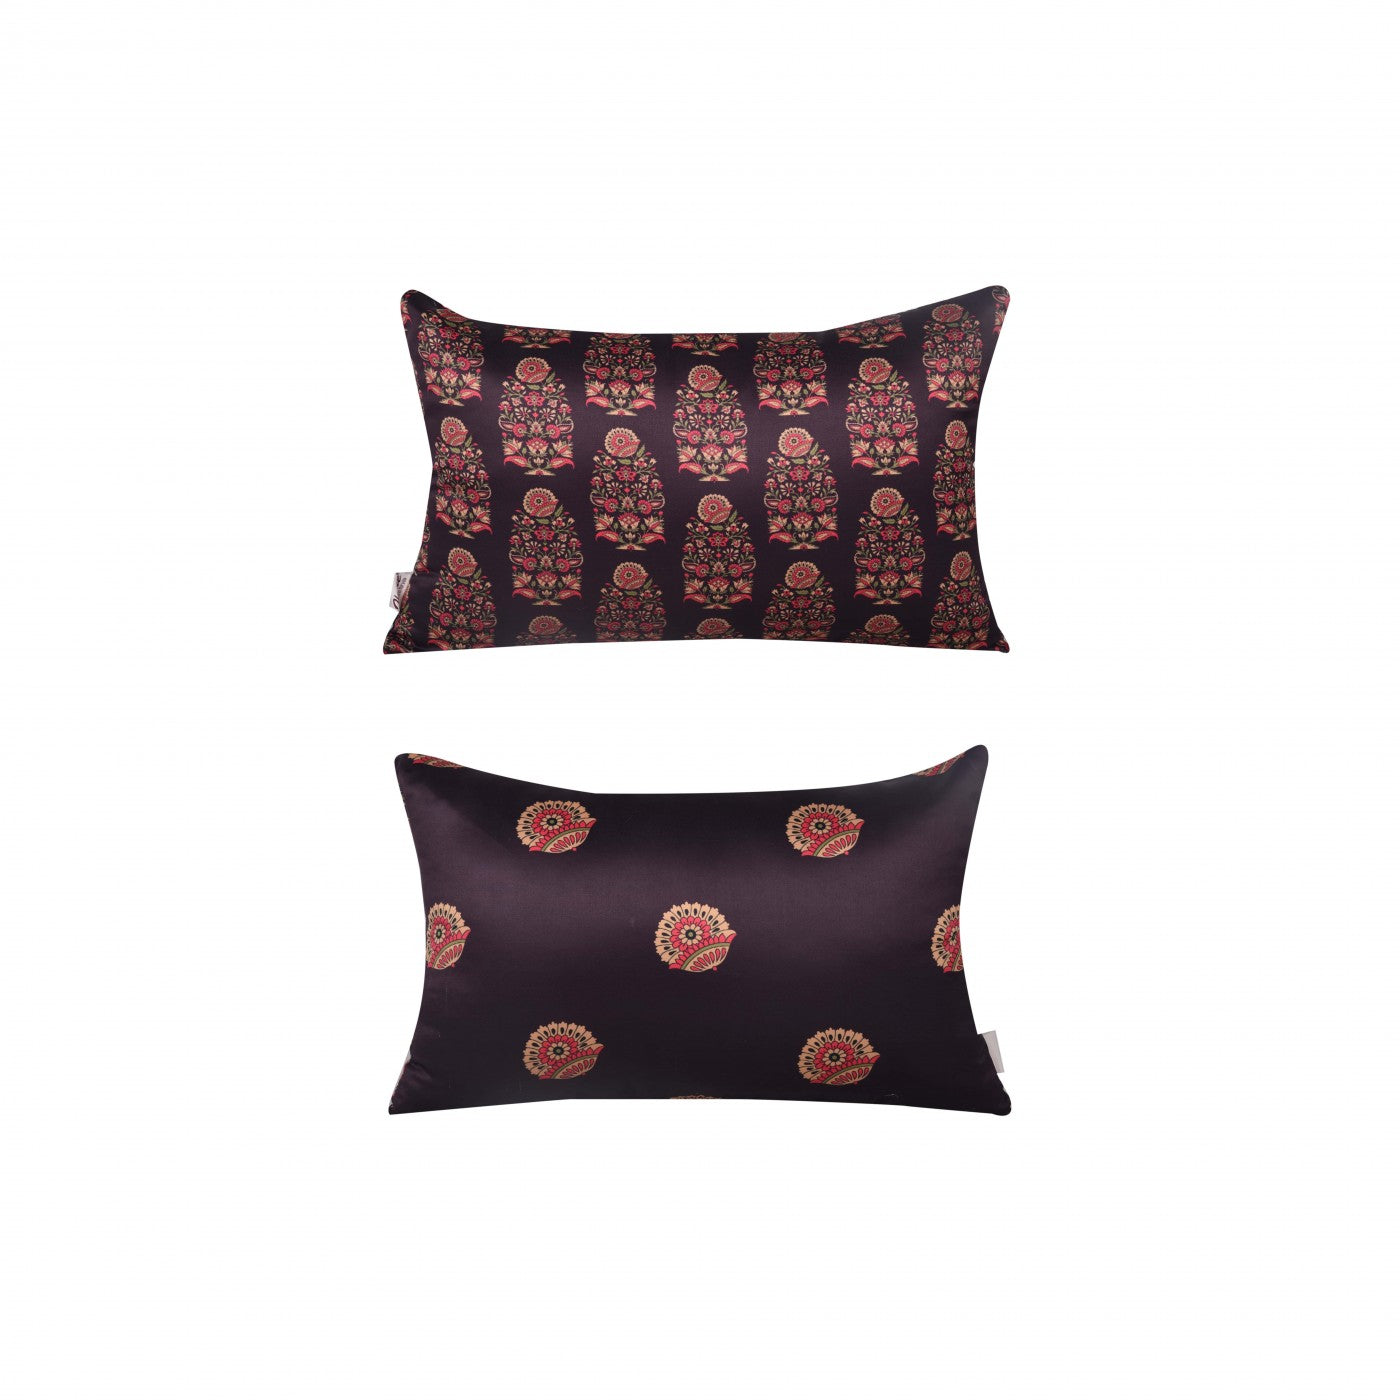 Sleek Elegance: 12x18 Inch Digital Printed Poly Satin Cushion Cover